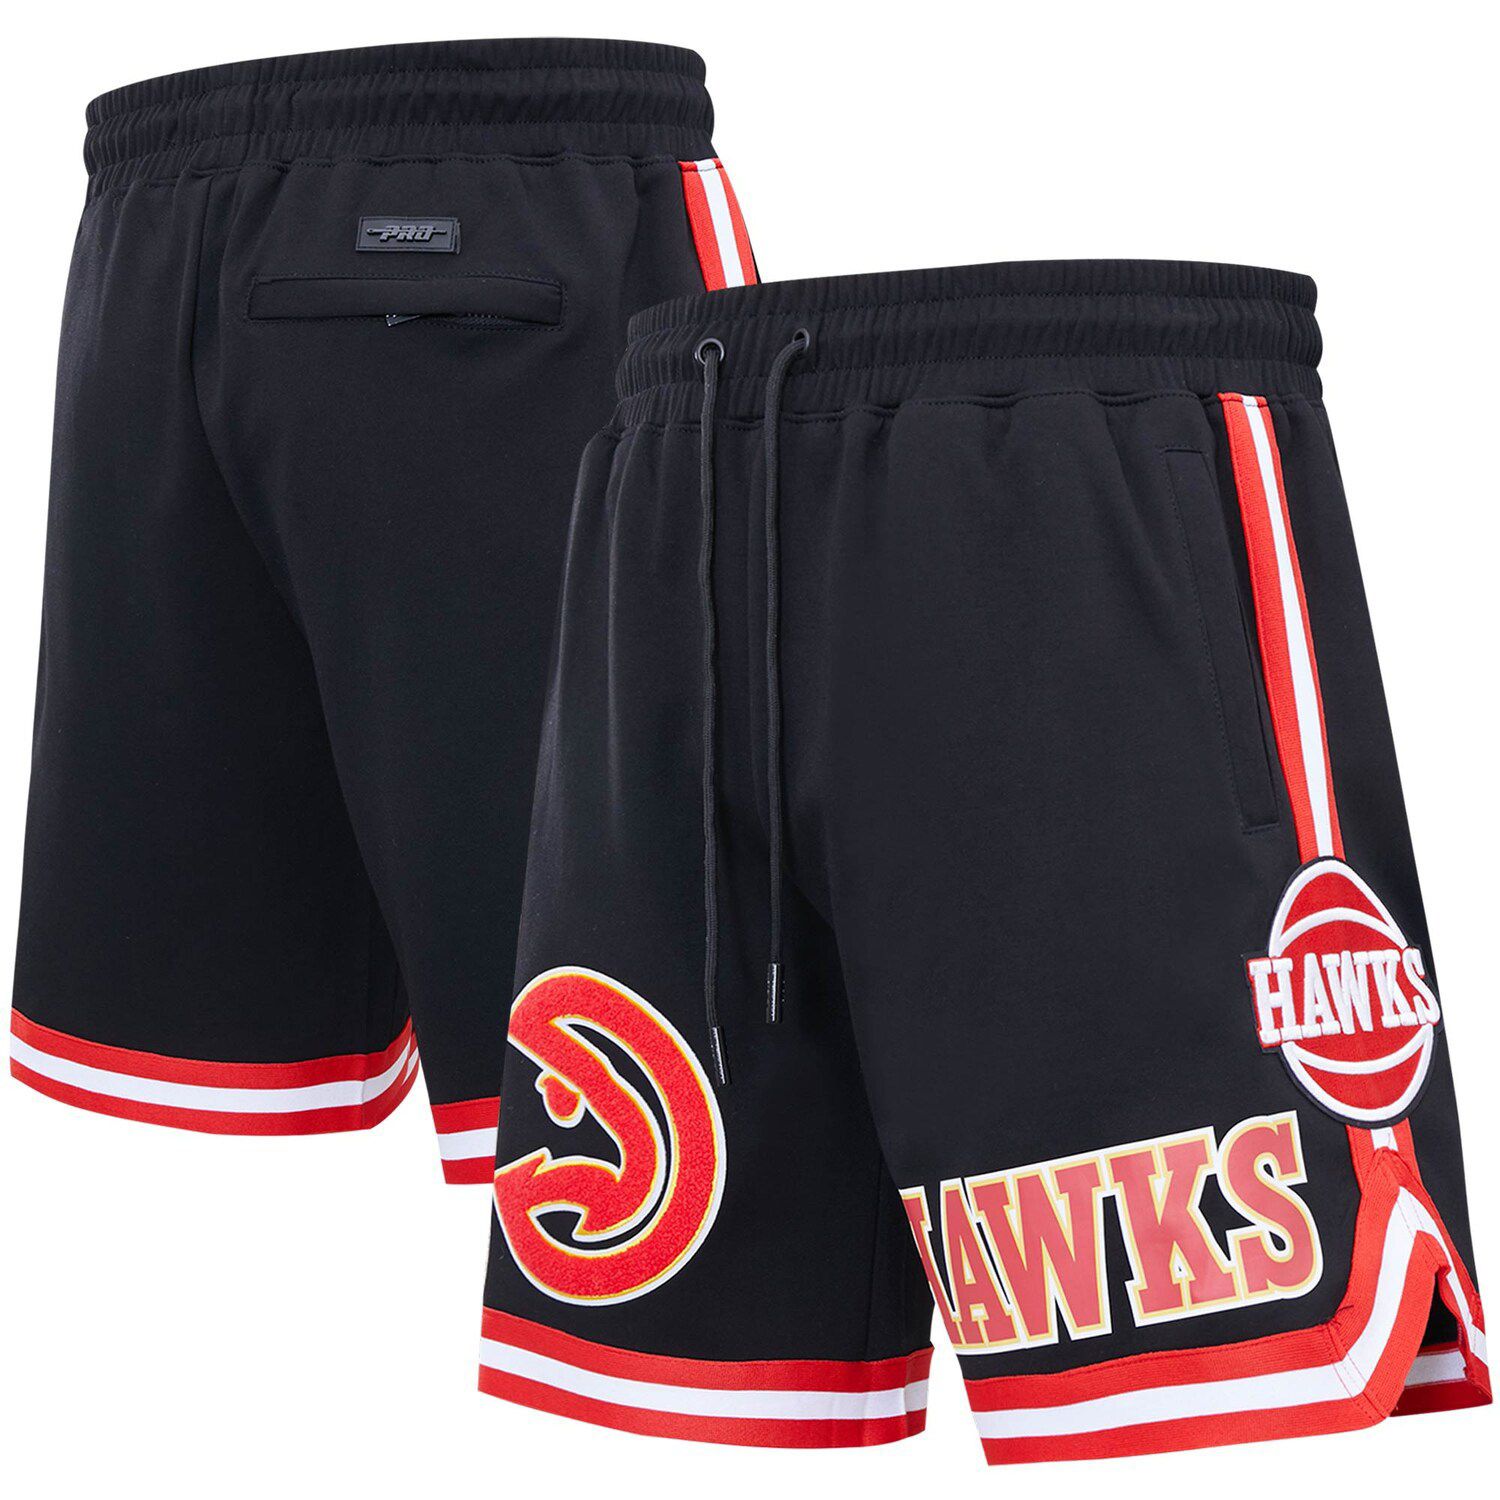 Image for Unbranded Men's Pro Standard Black Atlanta Hawks Chenille Shorts at Kohl's.